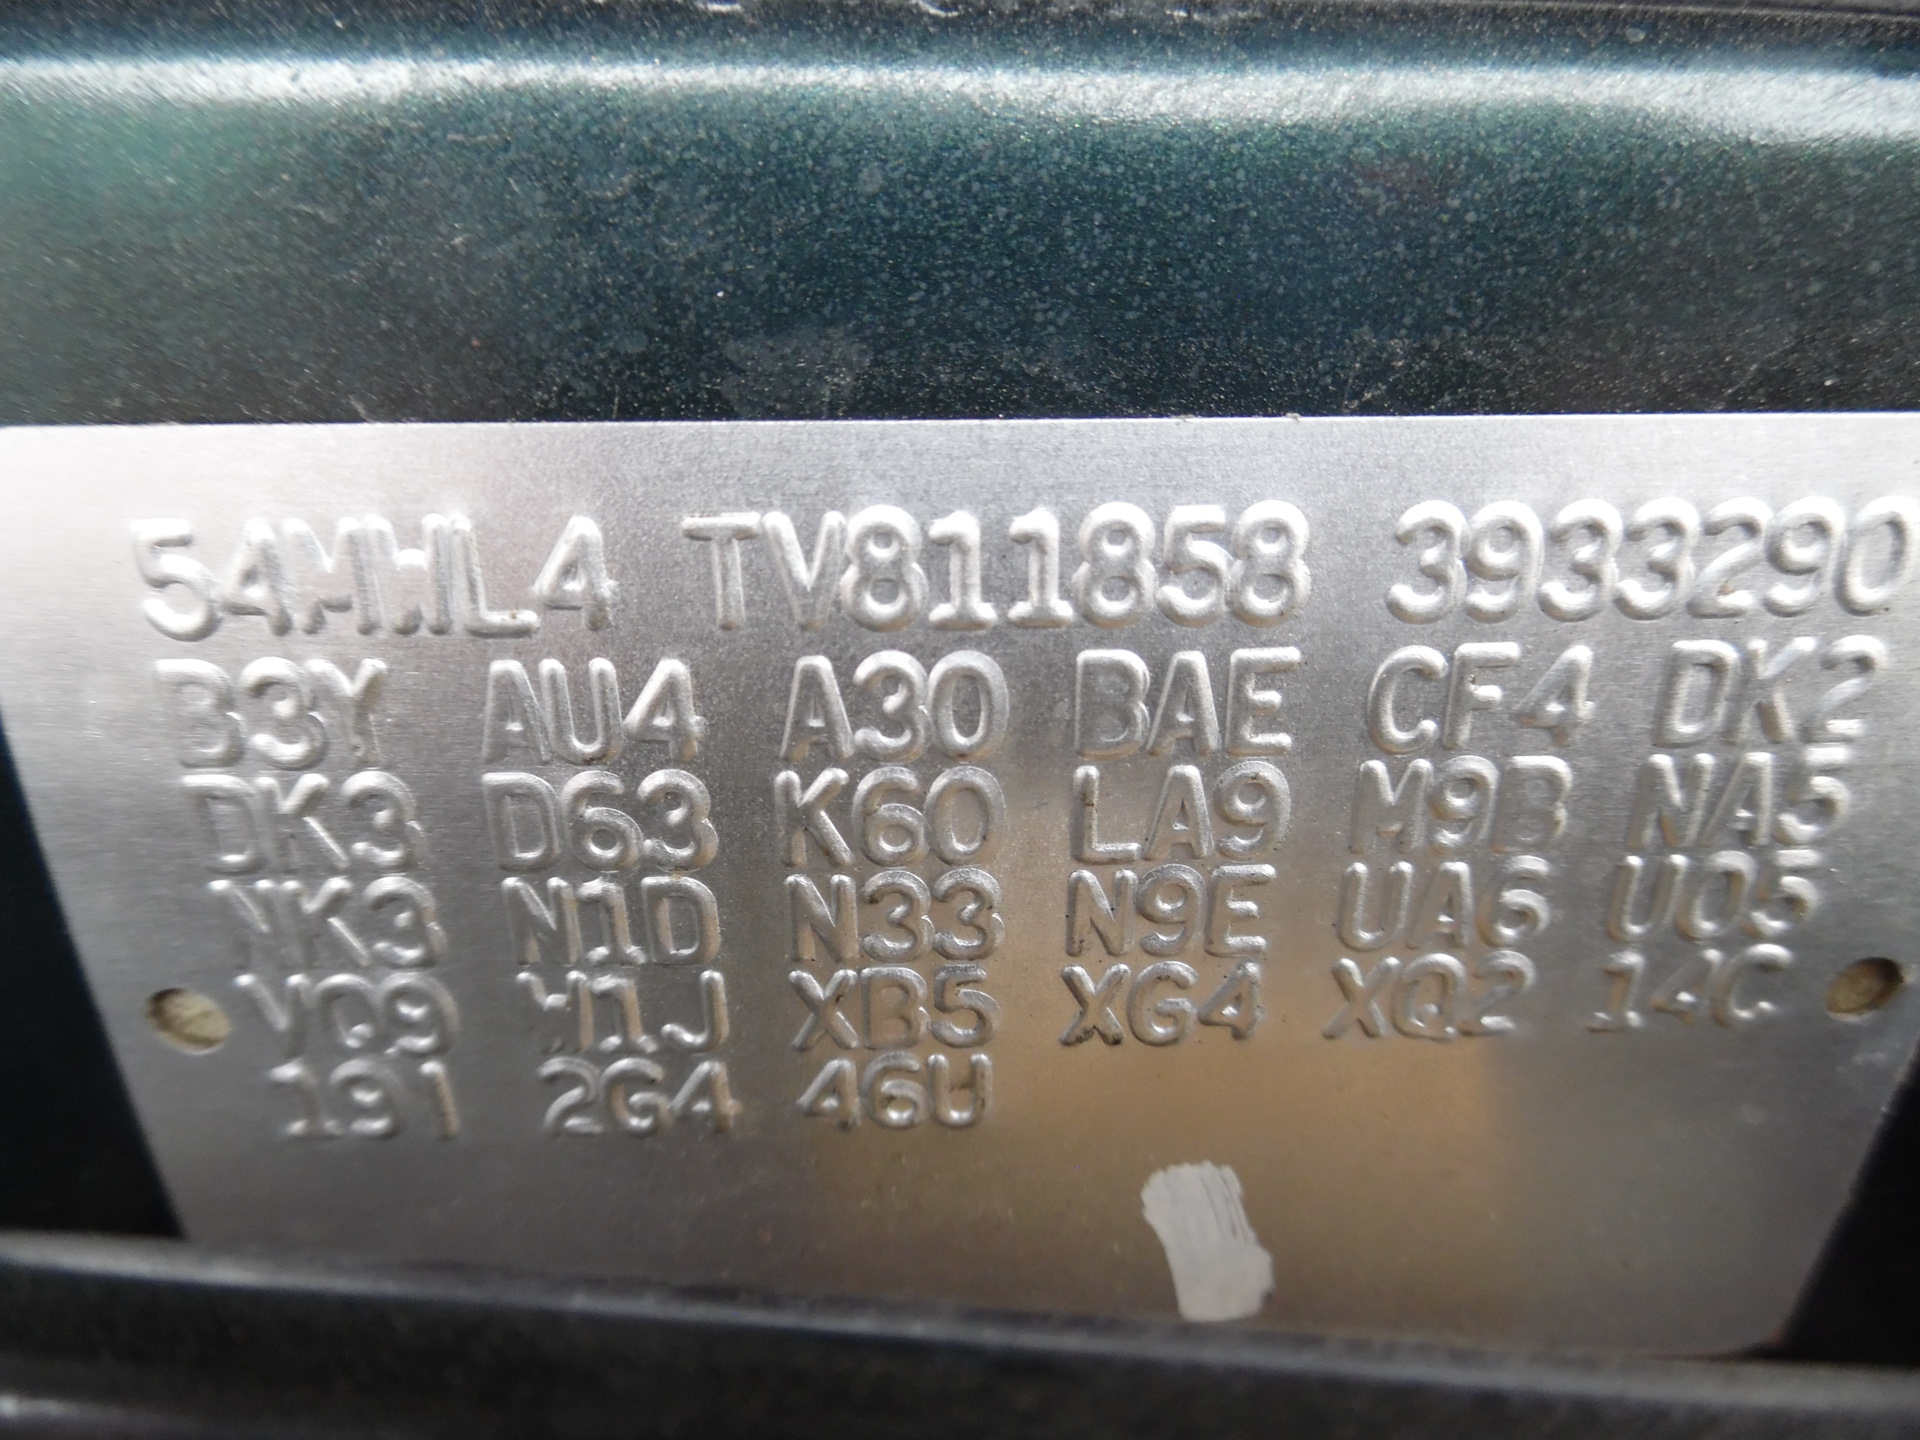 Opel code. VIN номер Opel Frontera b. Опель Фронтера 1998 код краски. Вин номер на Опель Фронтера 1998. Номер кузова Опель Фронтера 1994.